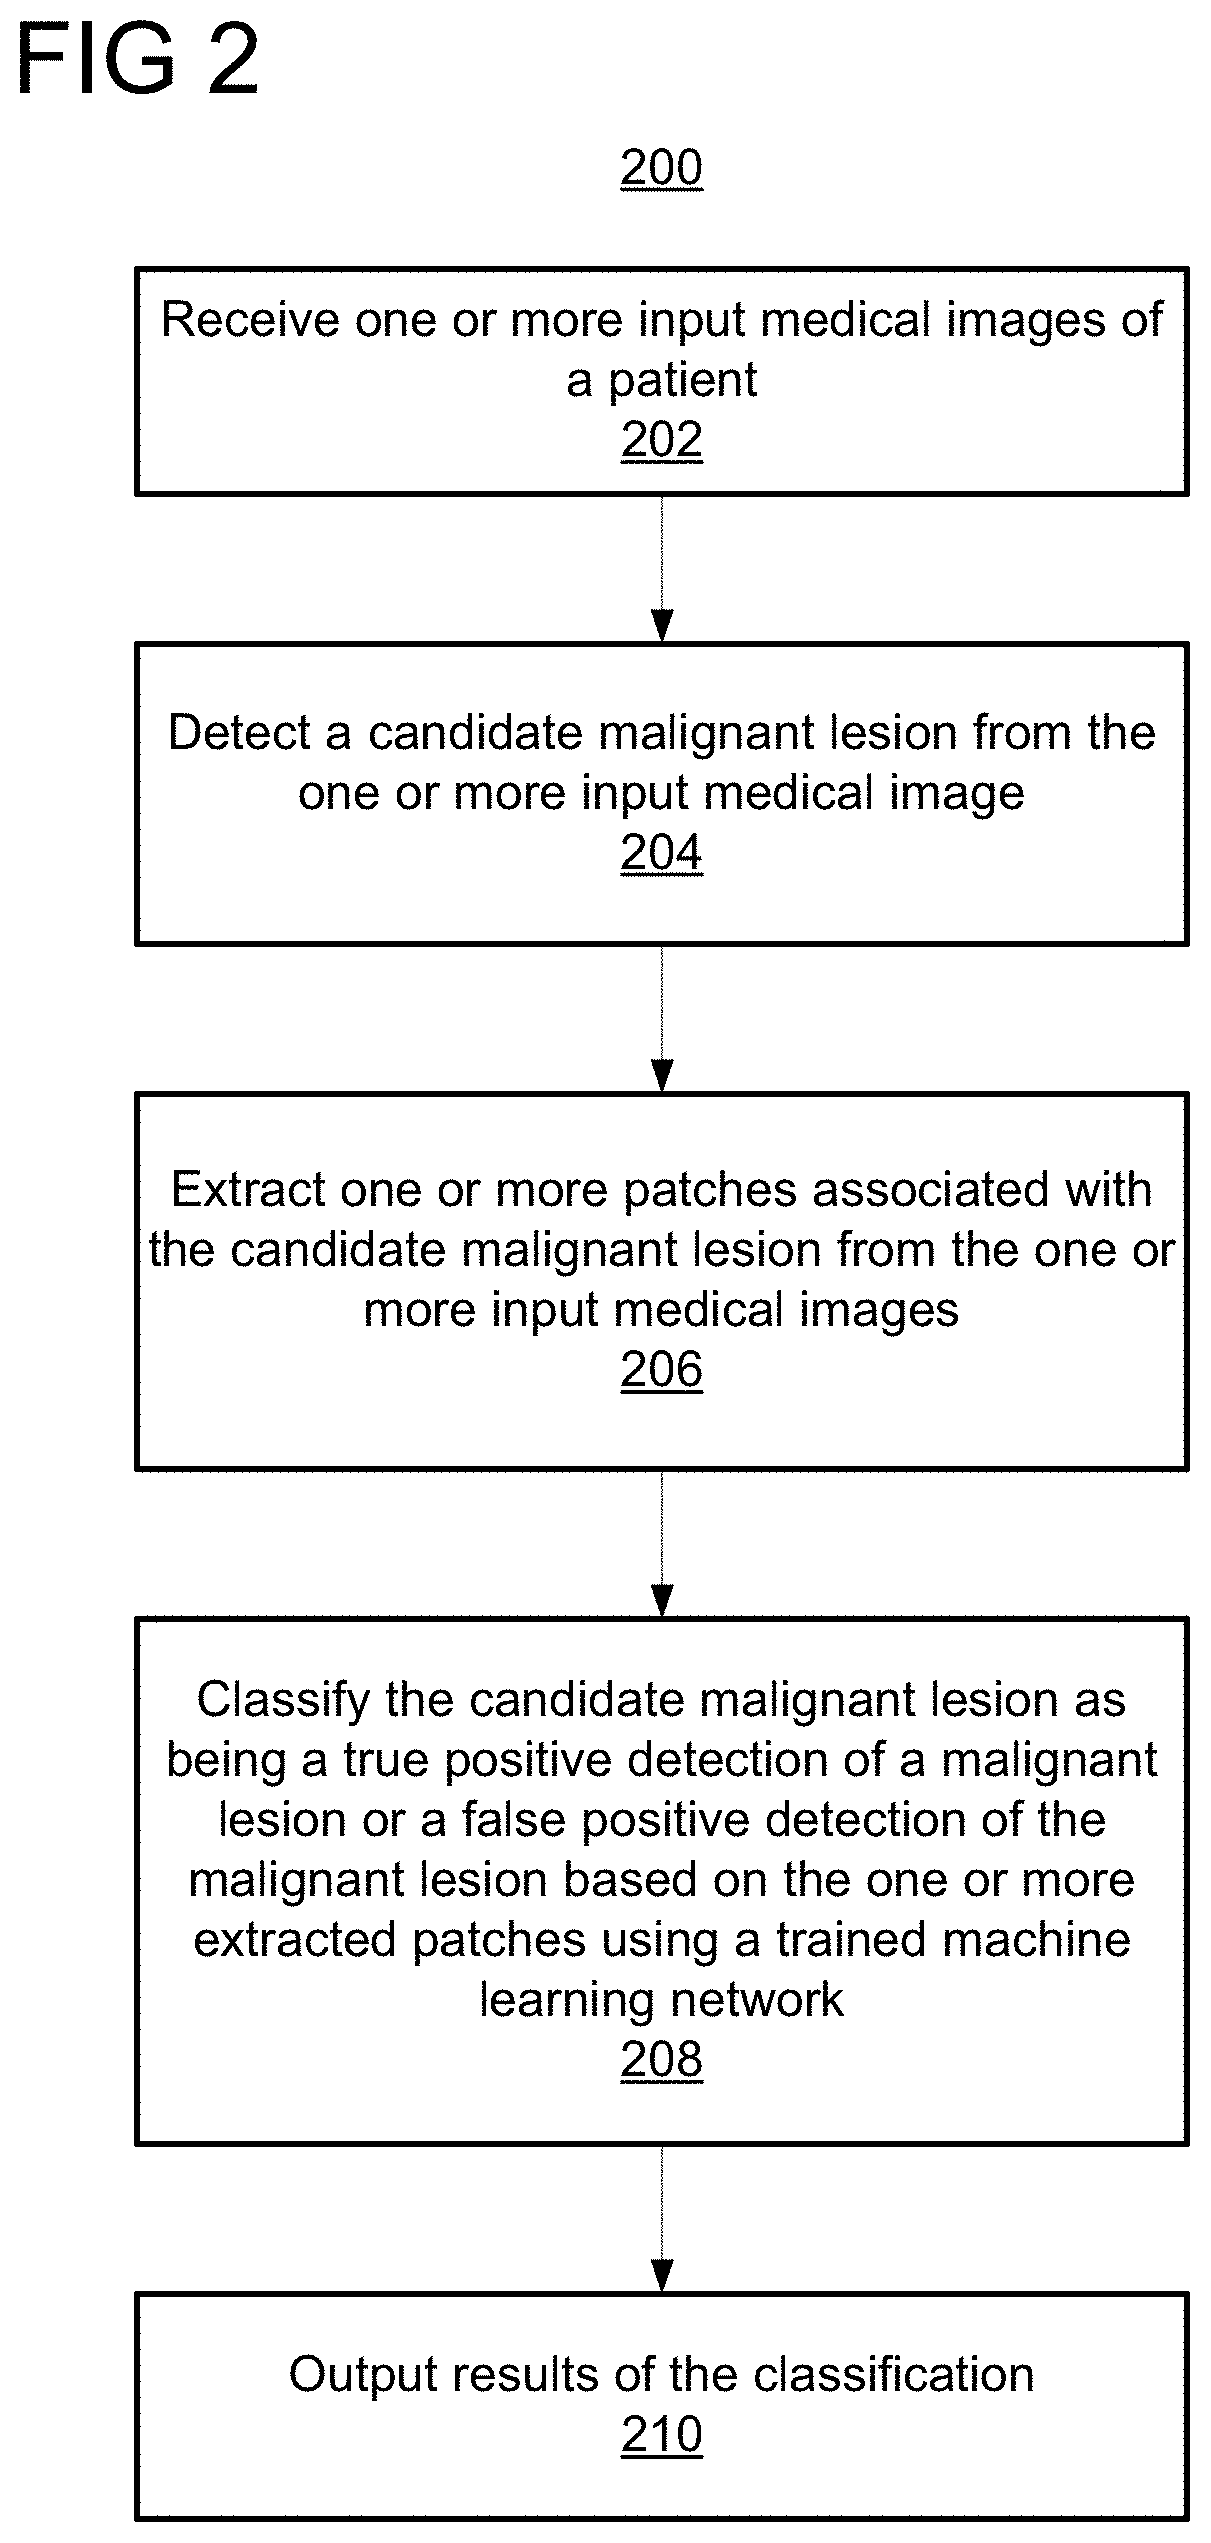 Reducing false positive detections of malignant lesions using multi-parametric magnetic resonance imaging